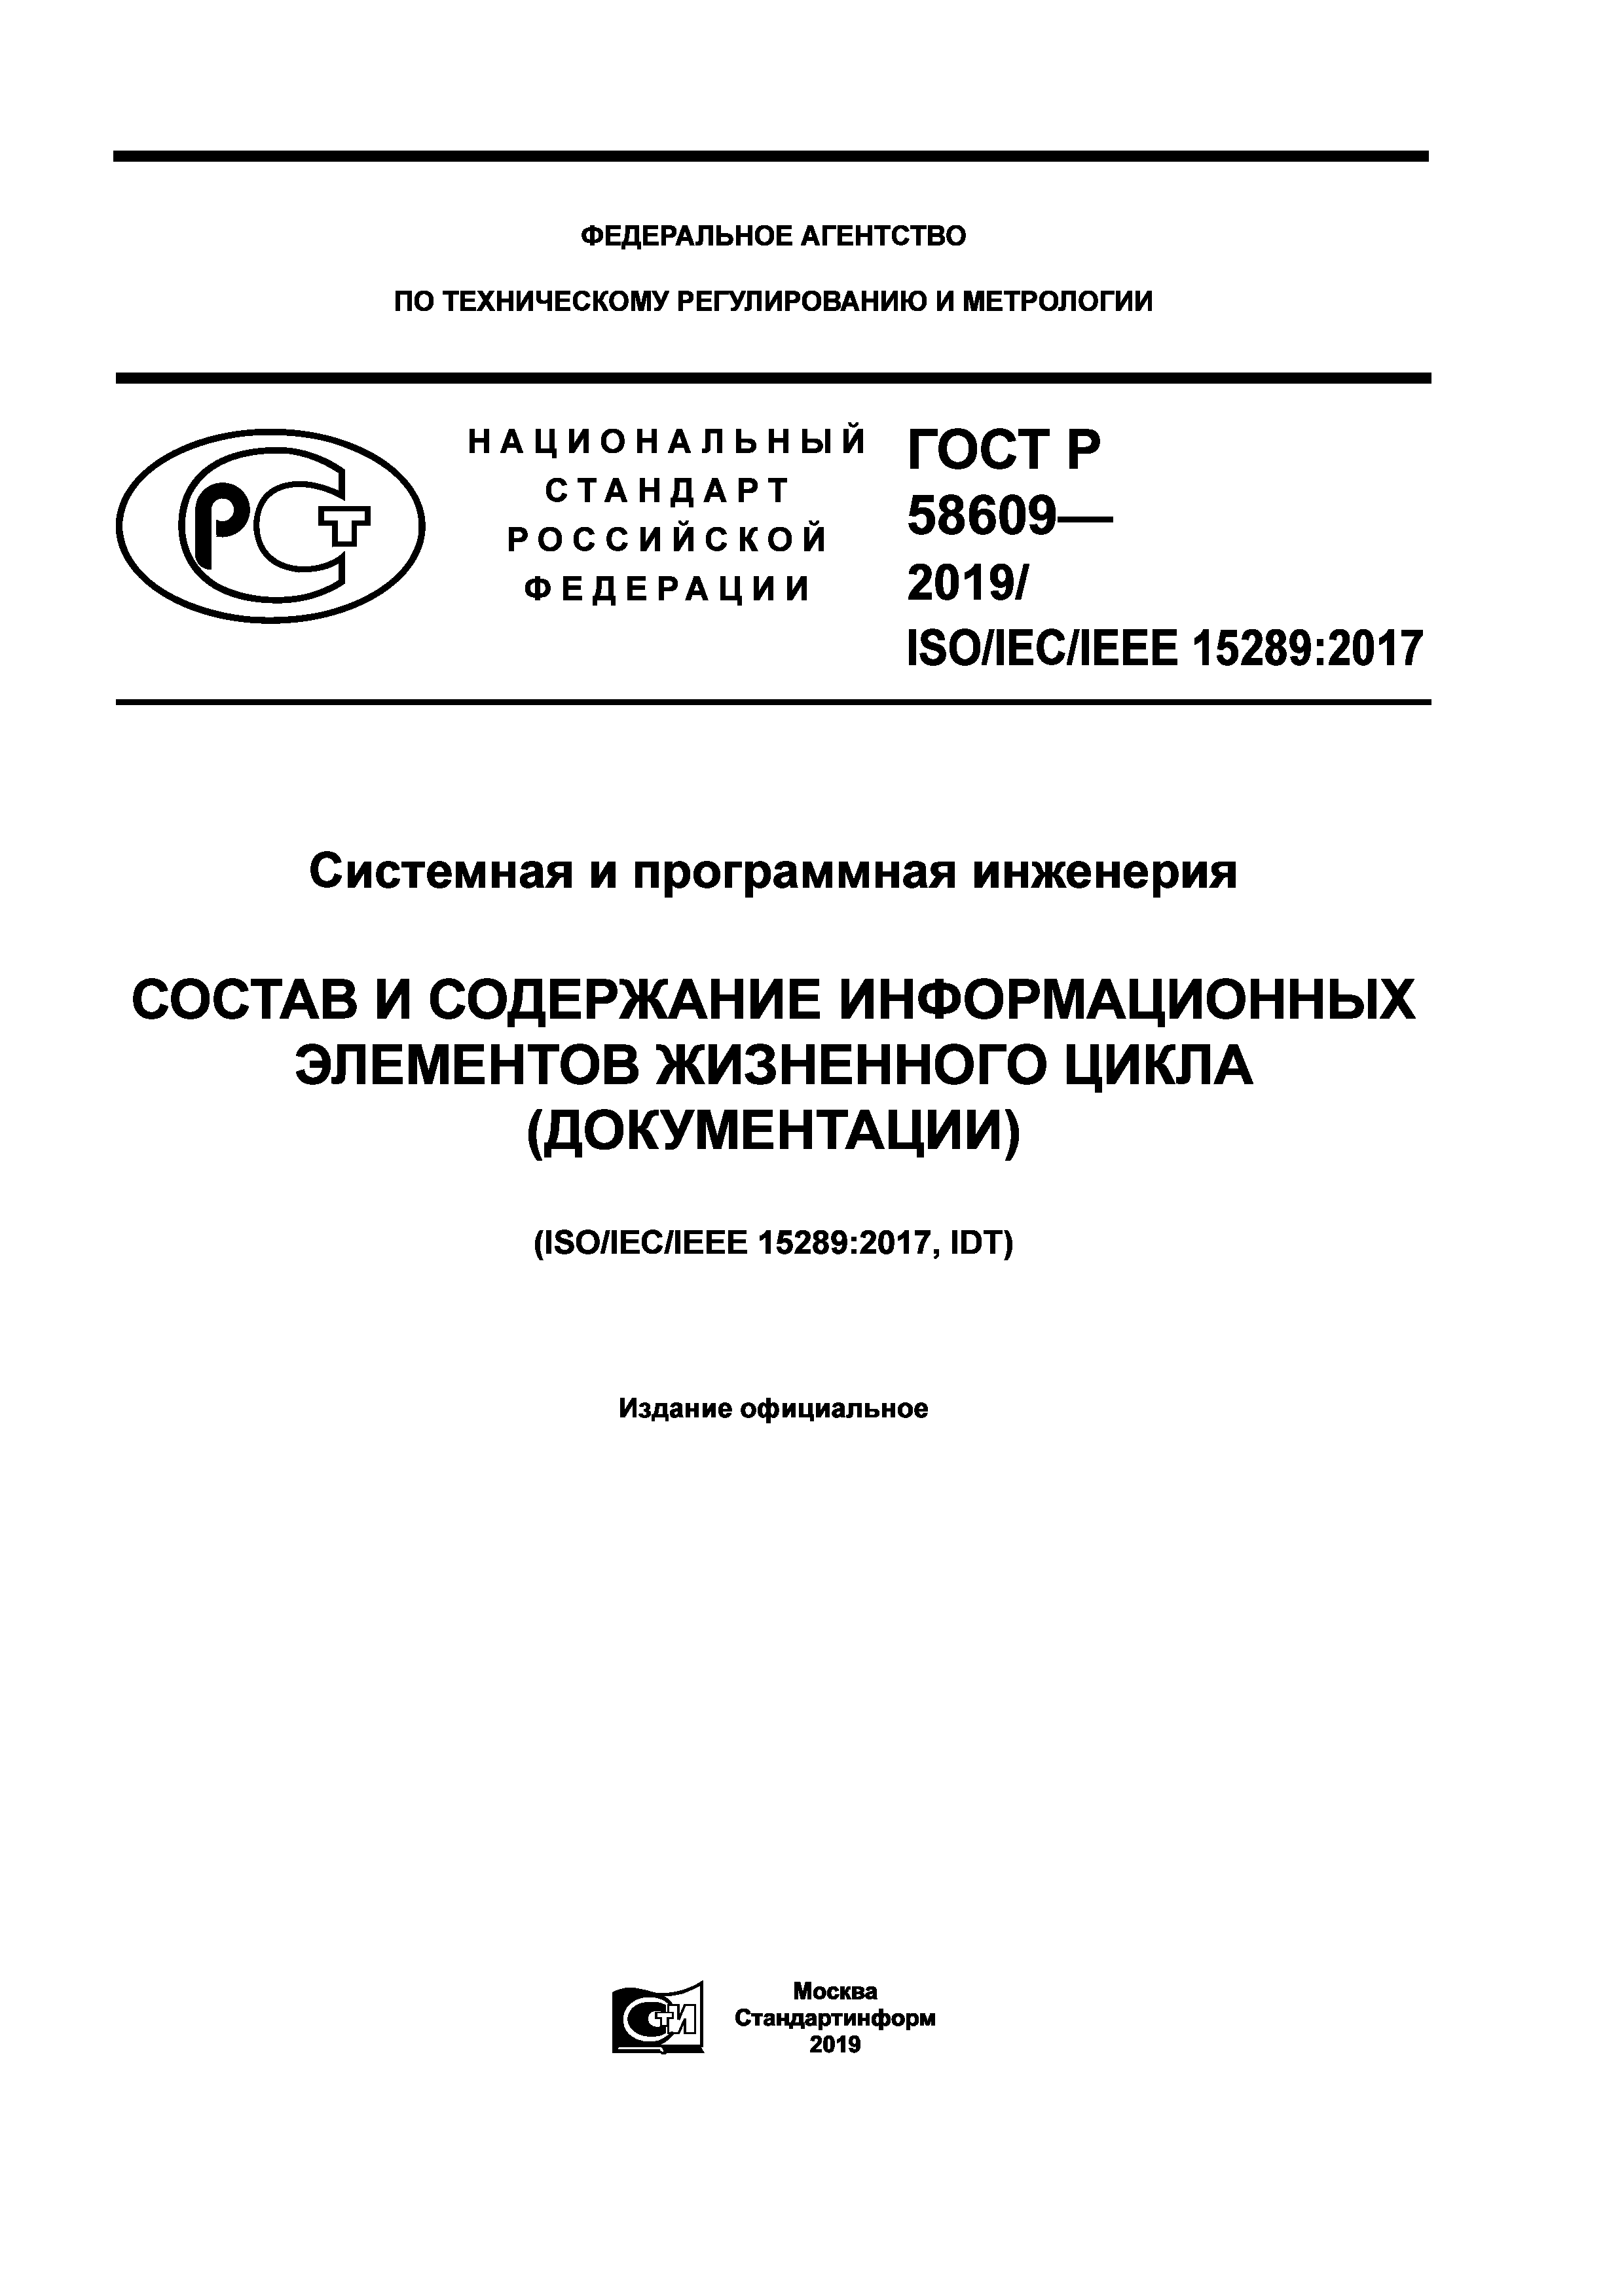 ГОСТ Р 58609-2019